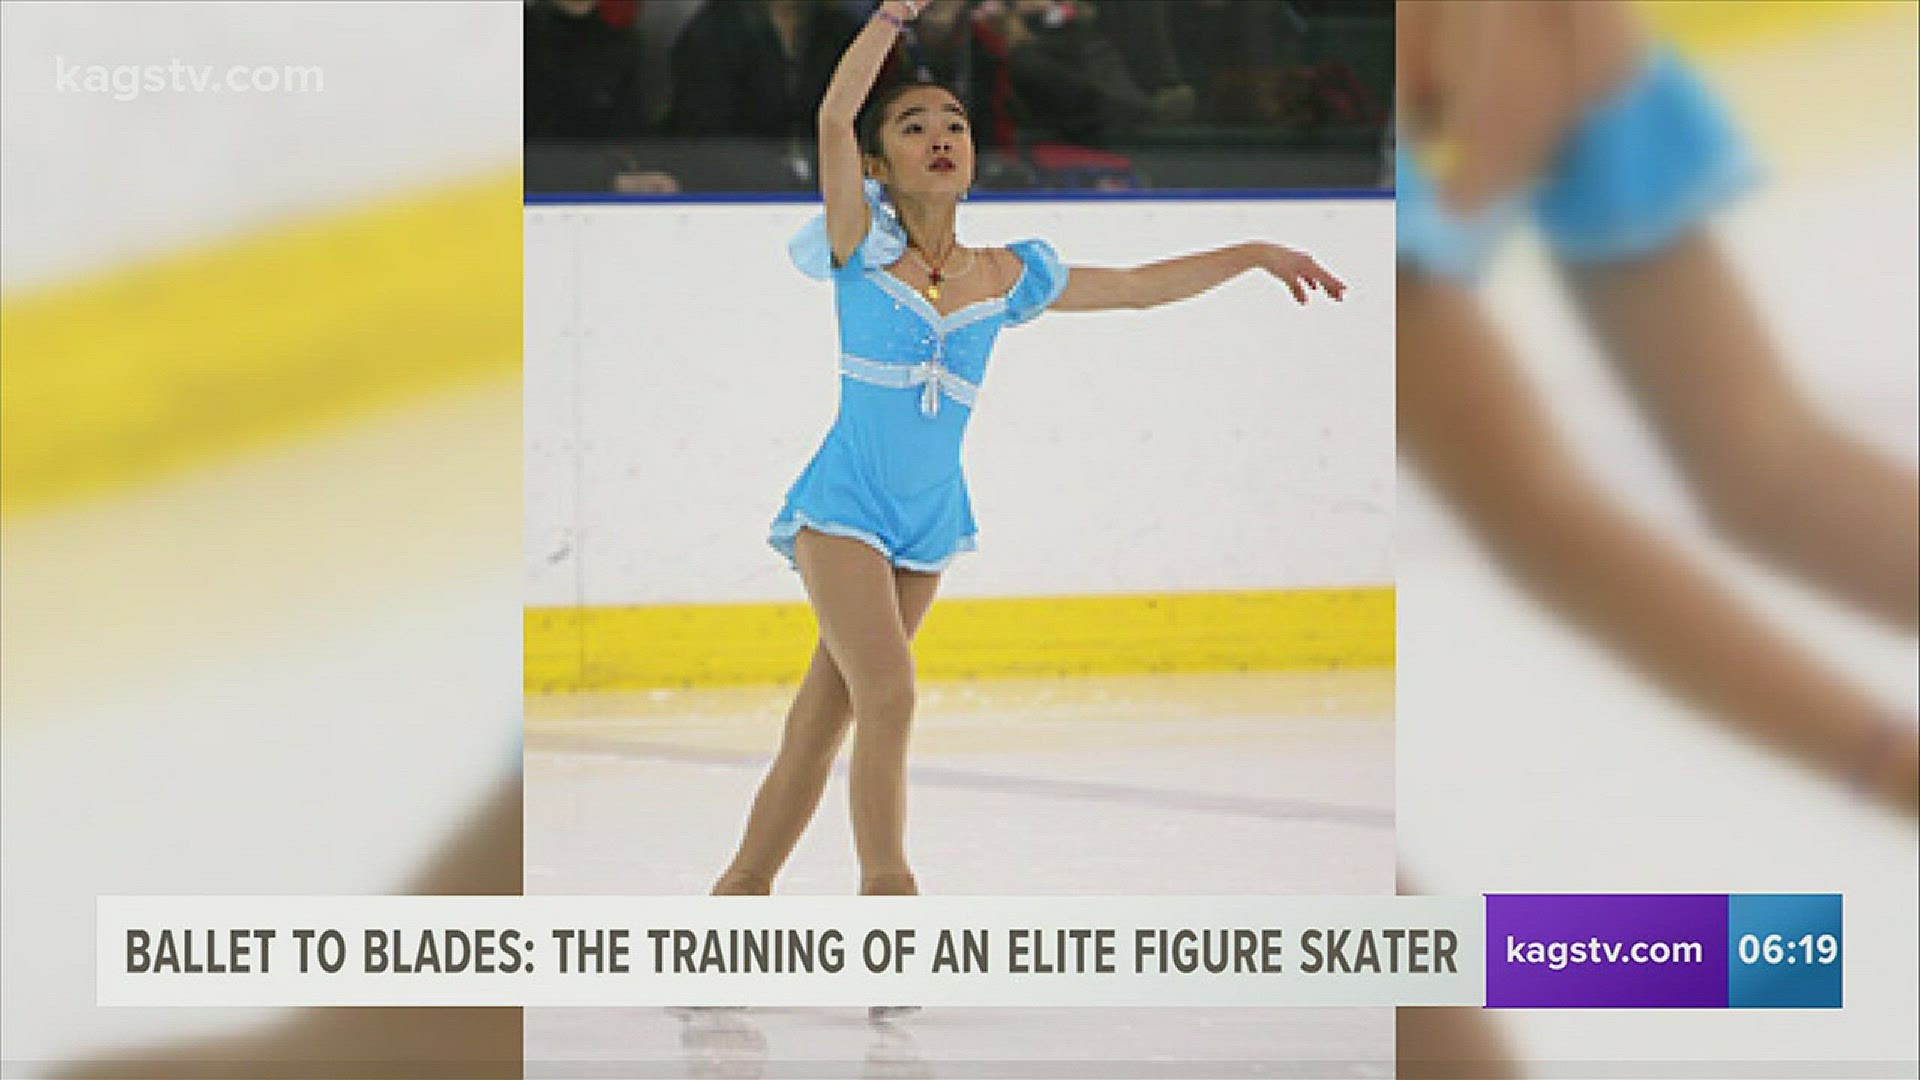 Two elite figure skaters train the next generation of olympic hopefuls